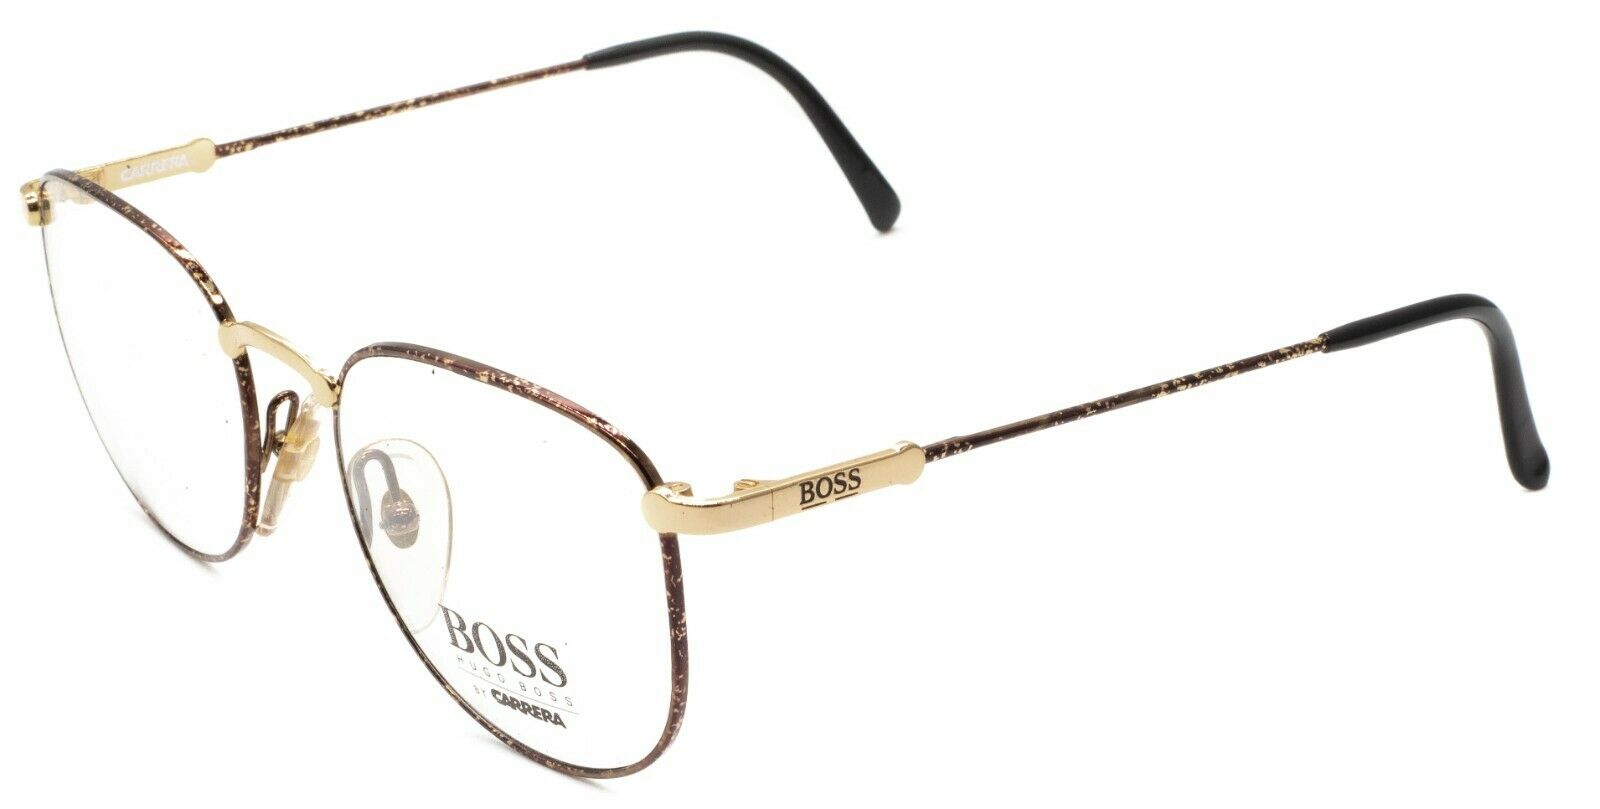 HUGO BOSS 5127 49 51mm Vintage Eyewear FRAMES Glasses RX Optical Eyeglasses  New - GGV Eyewear